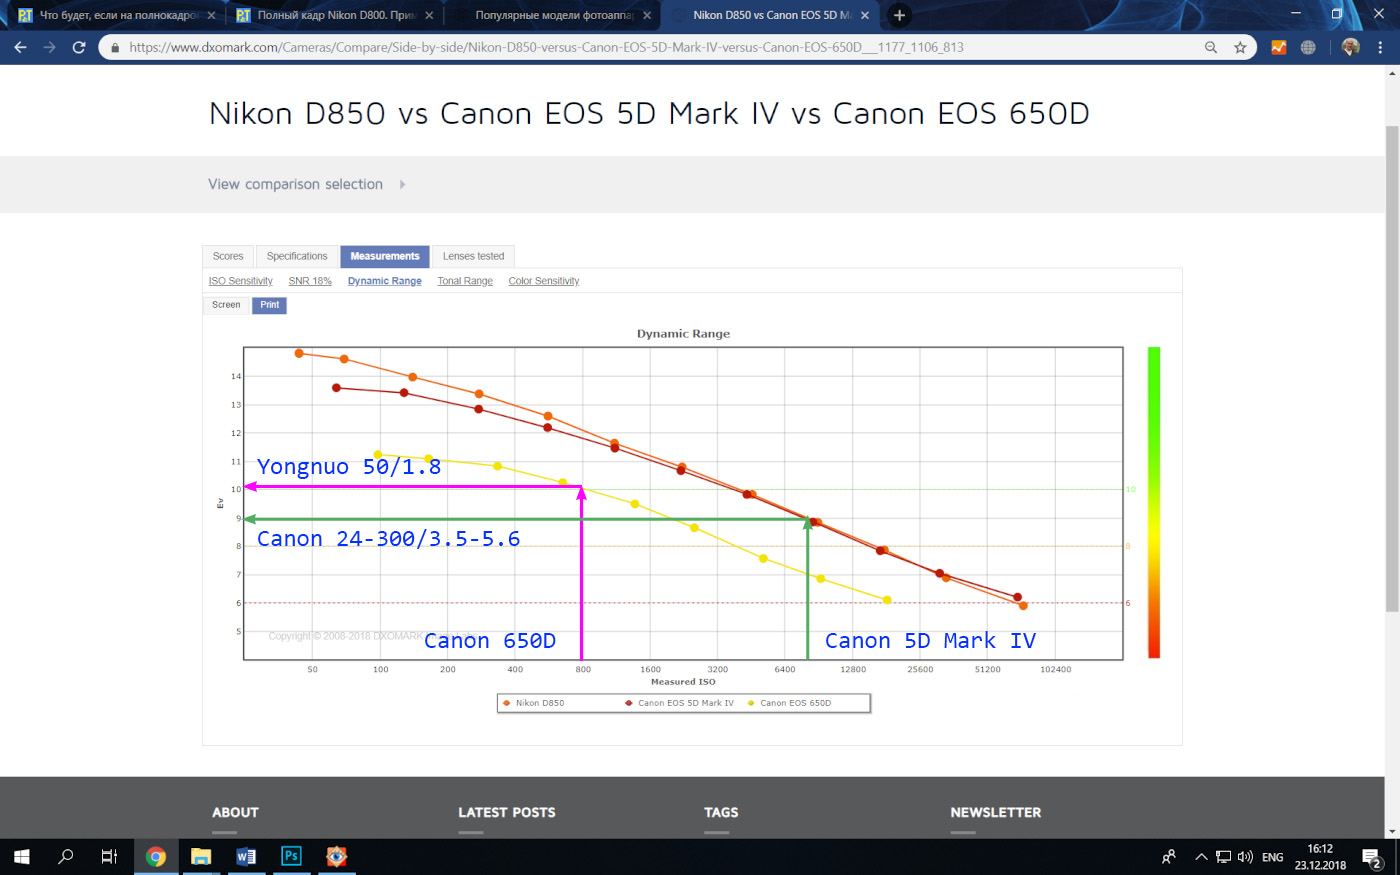 50. Сравнение Canon 650D, Canon 5D Mark IV и Nikon D850 по динамическому диапазону в зависимости от ISO.